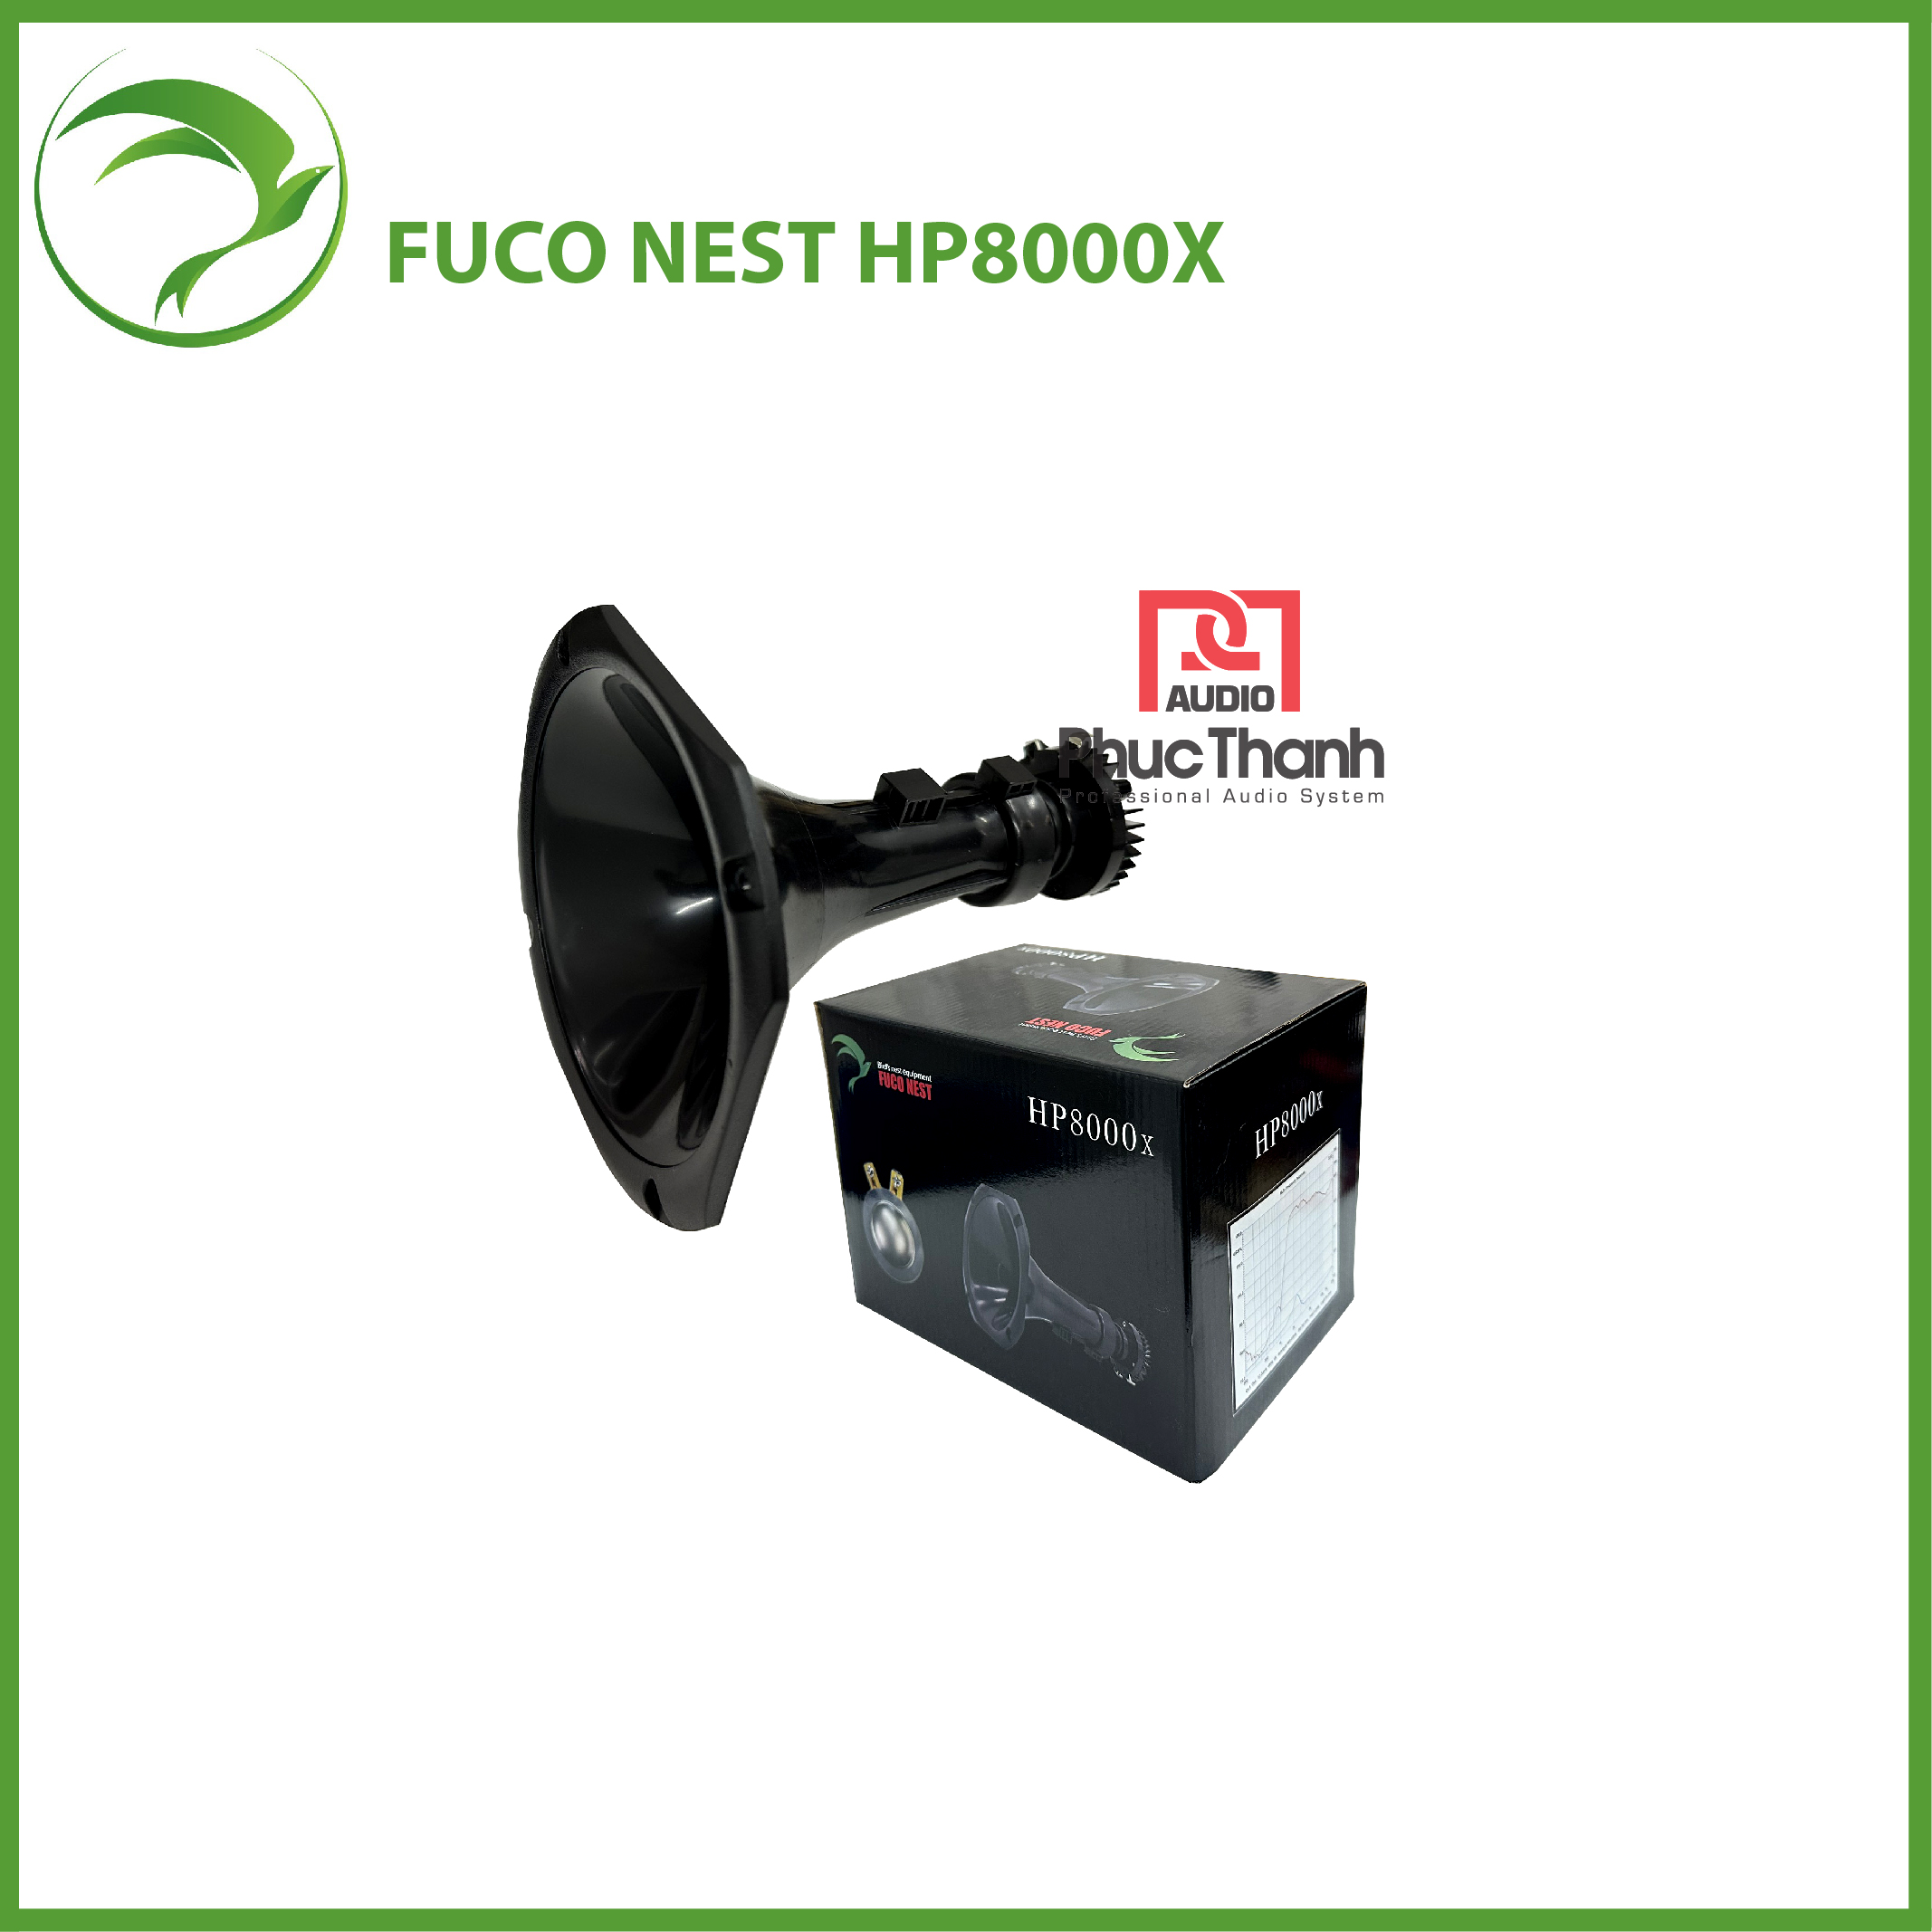 Loa Fuco Nest HP8000X